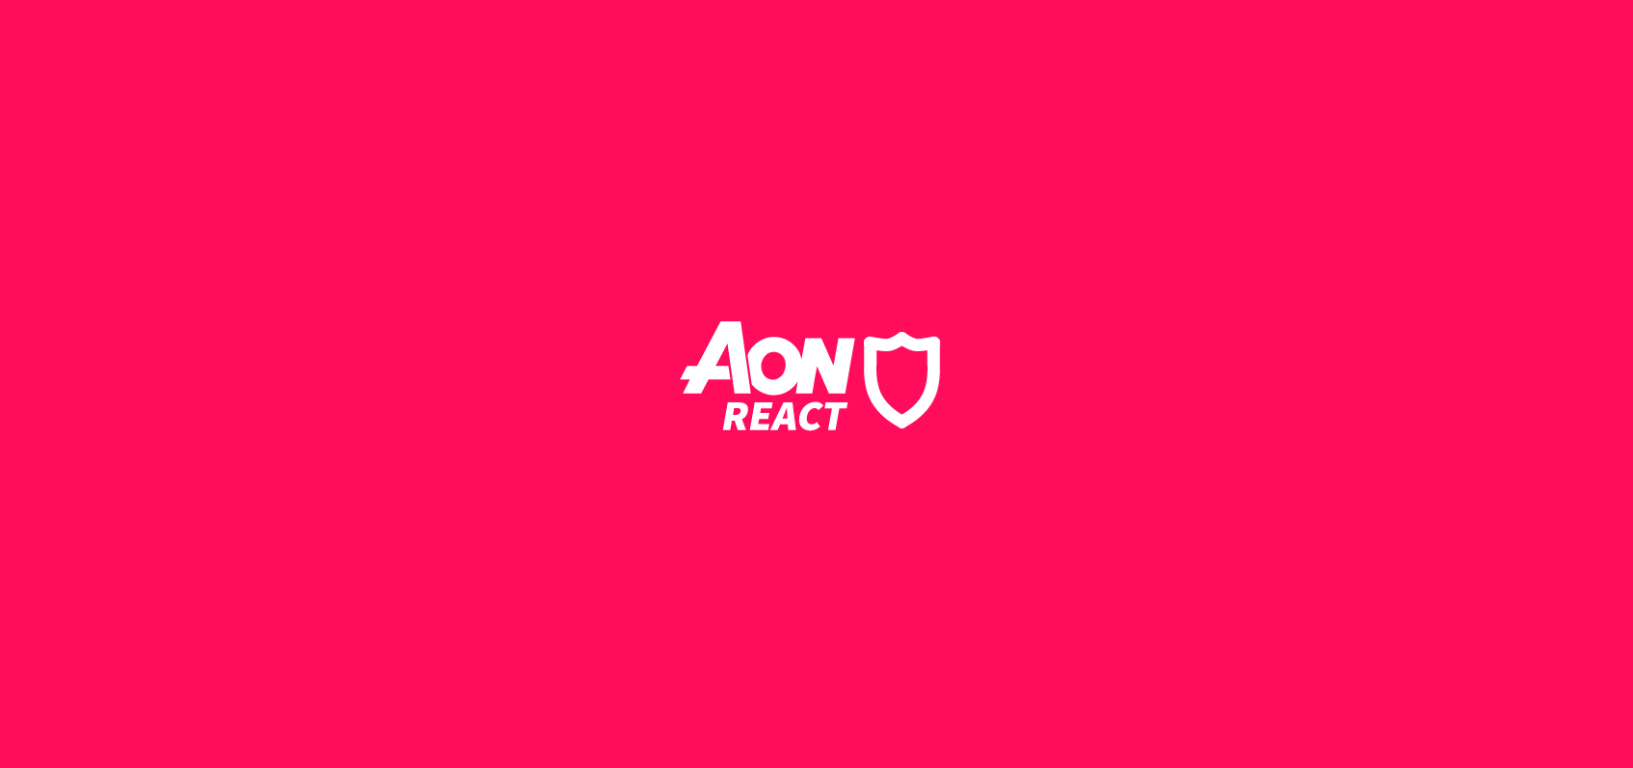 Aon REACT logo and splashscreen